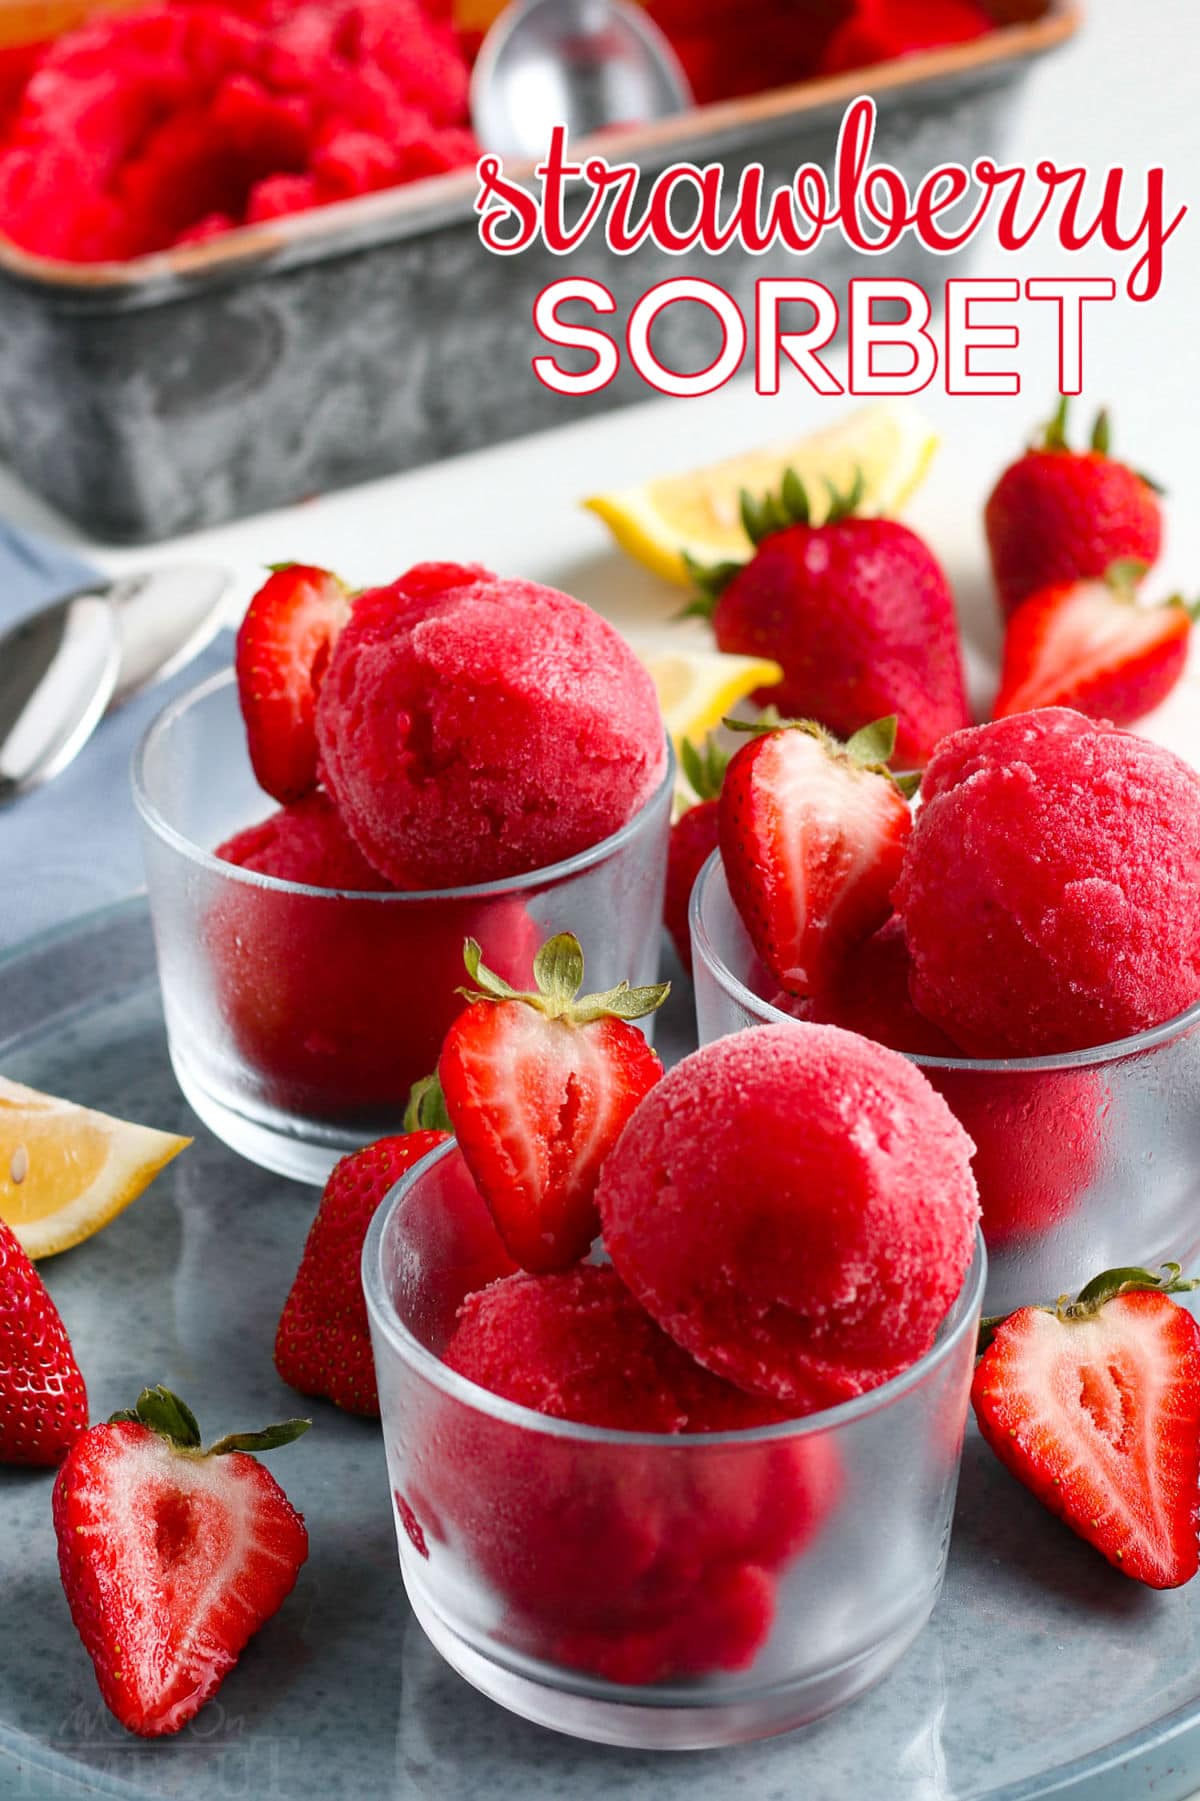 Strawberry Margarita Sorbet Recipe